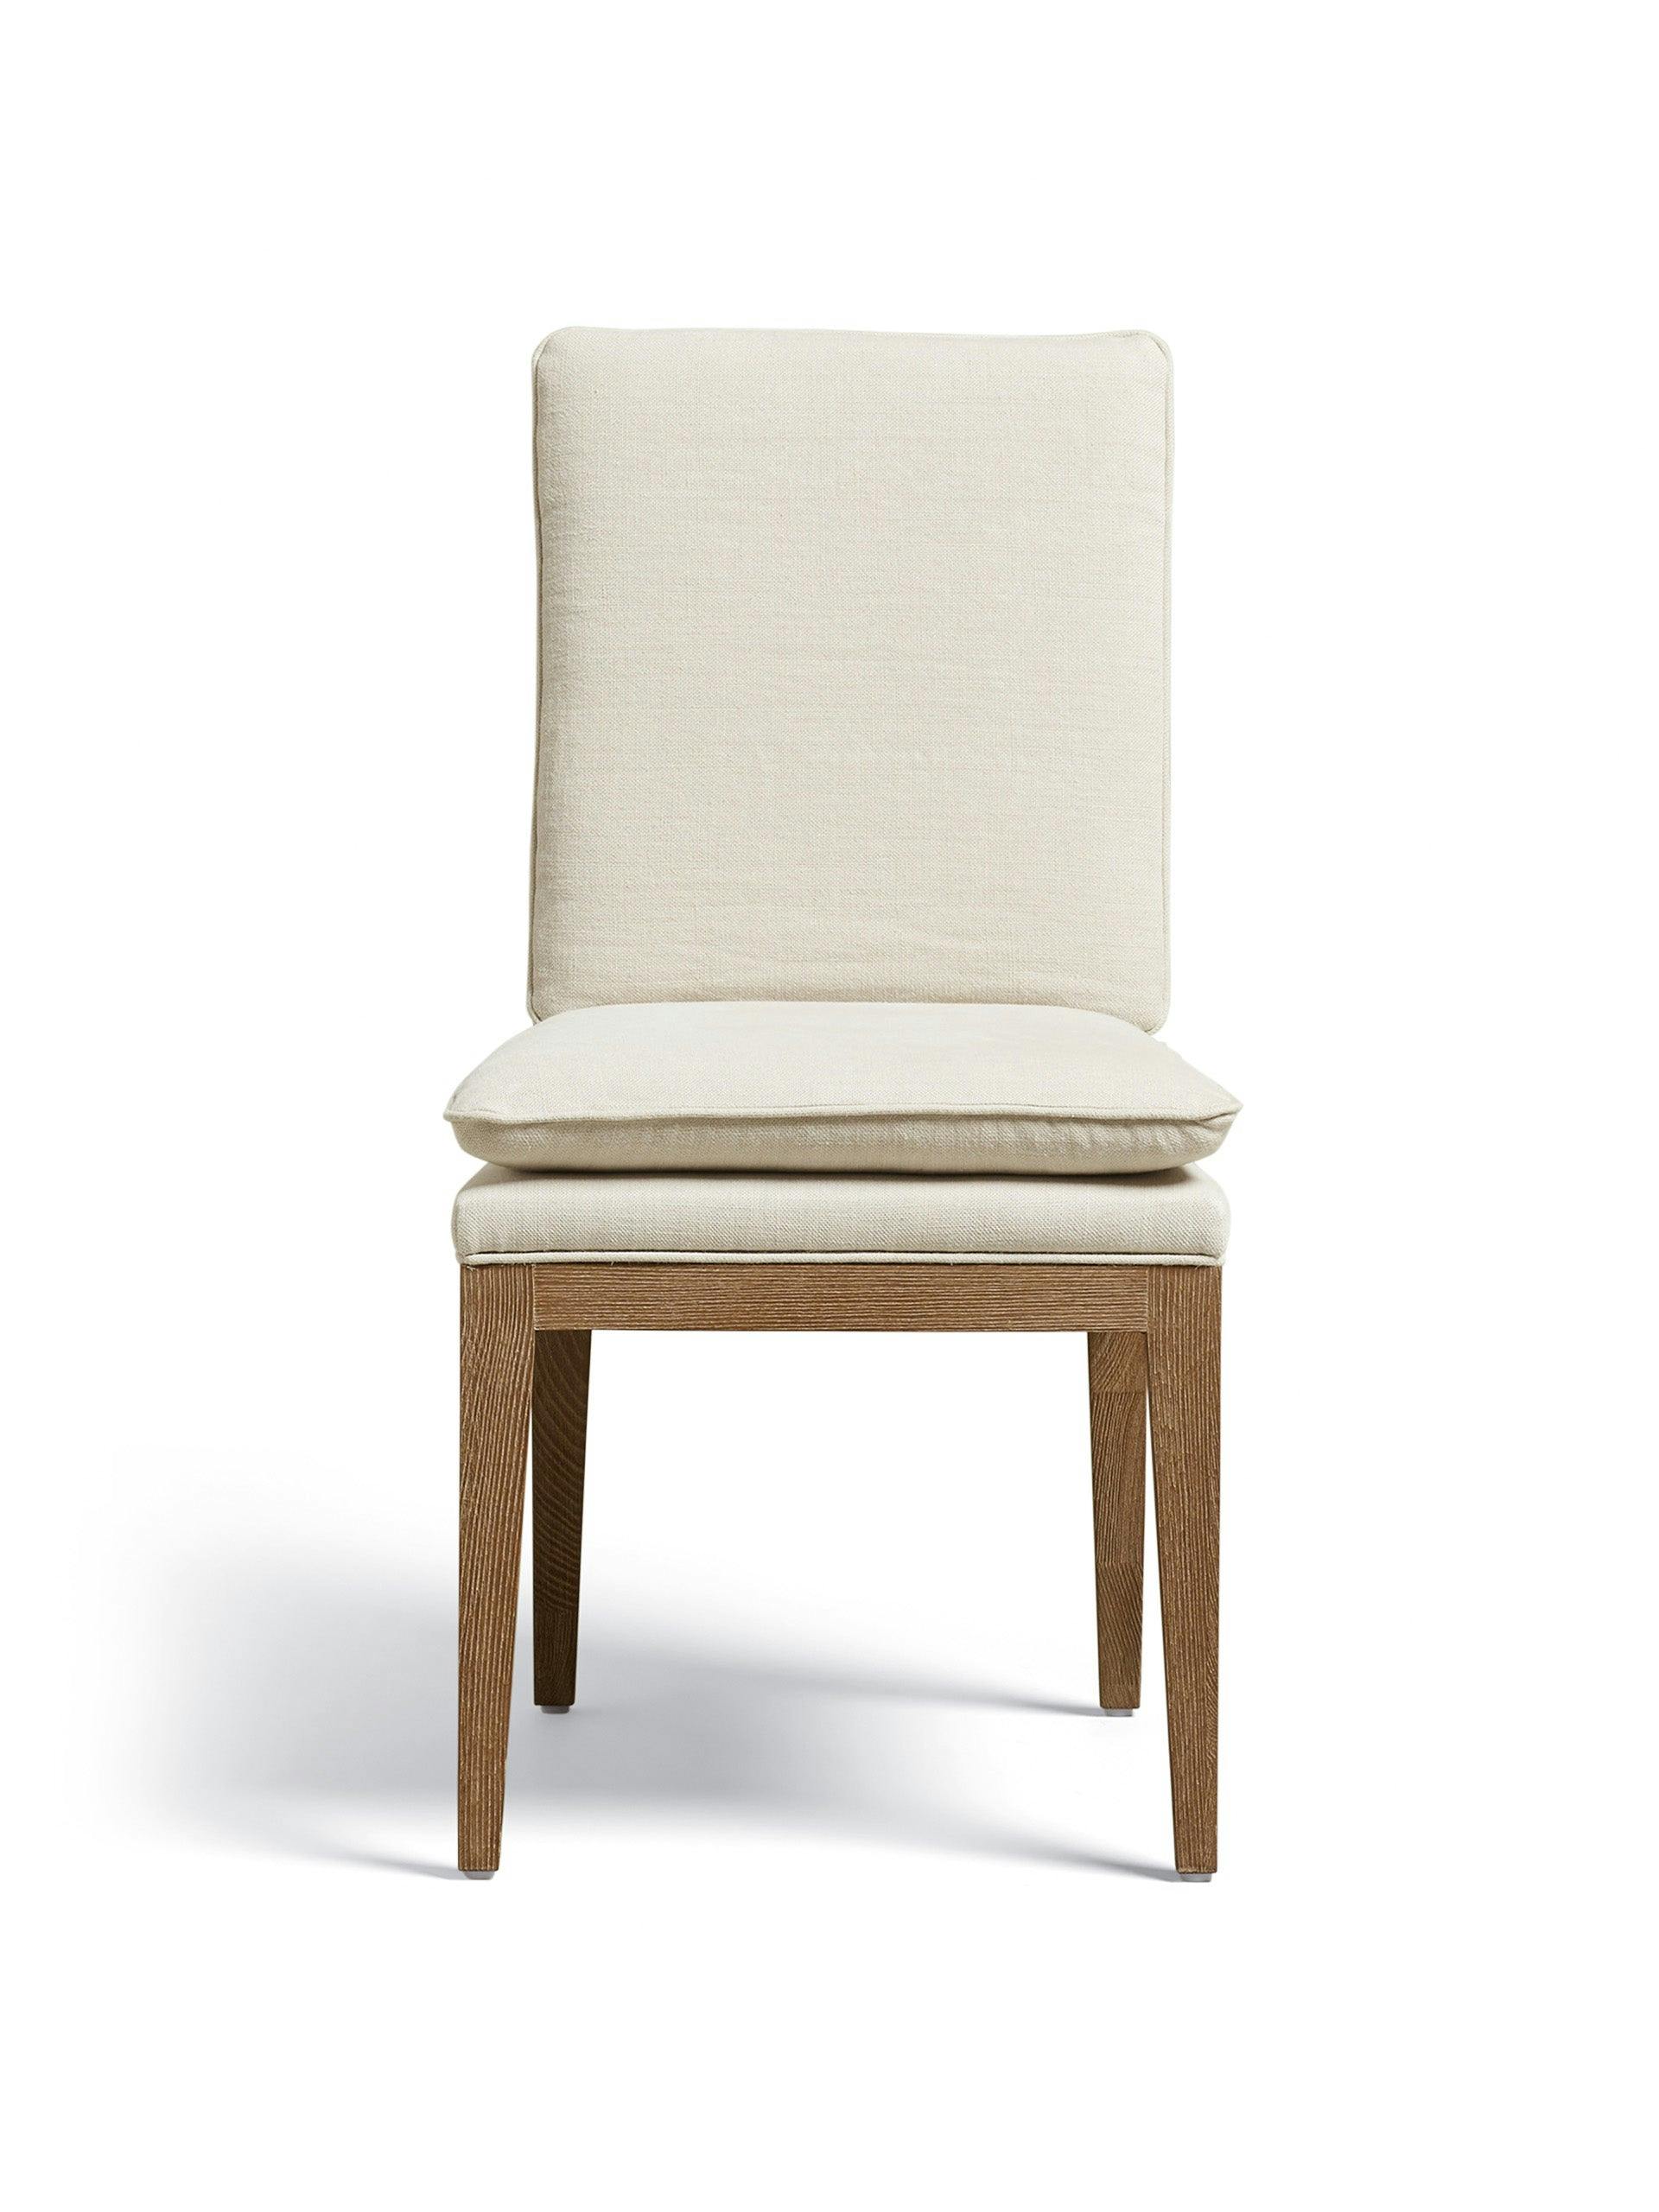 Vasa white linen chair